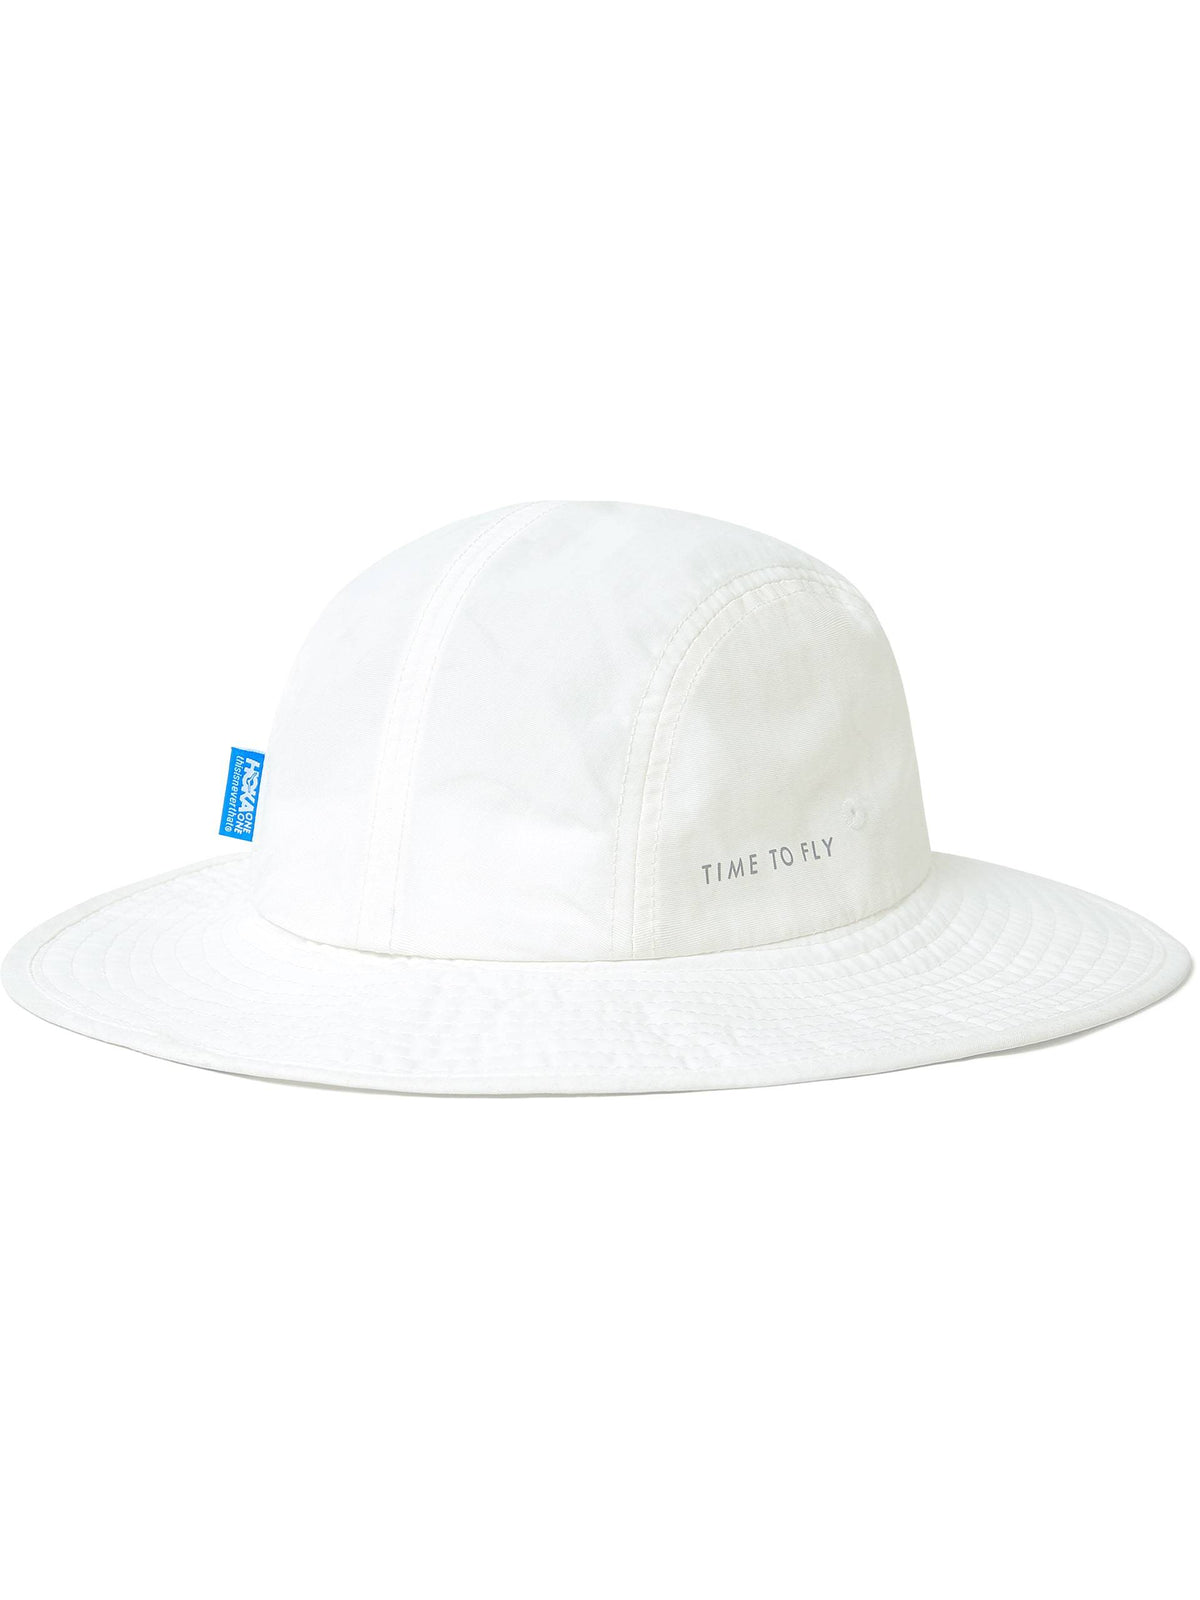 TNT HOKA Bucket Hat Headwear 